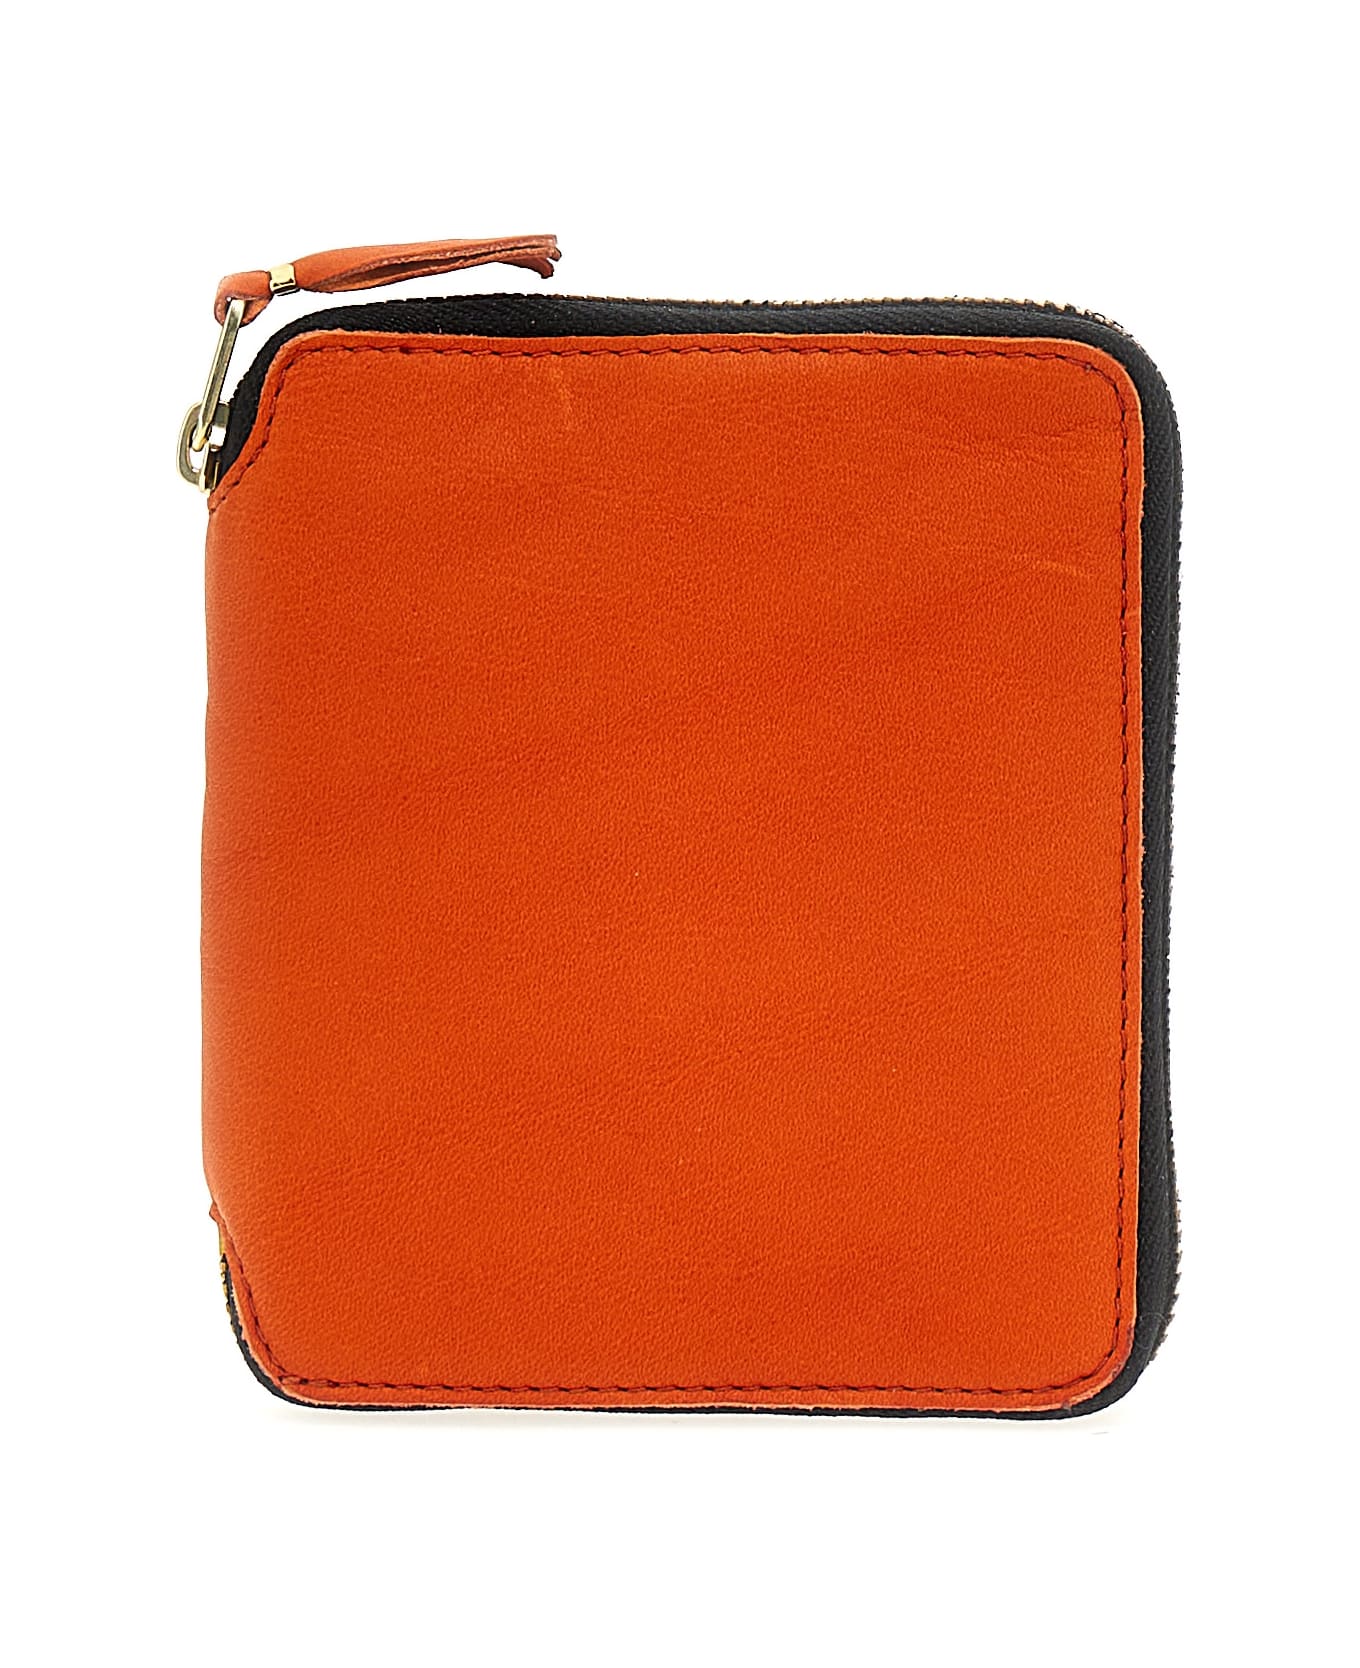 Comme des Garçons Wallet 'washed' Wallet - Orange 財布